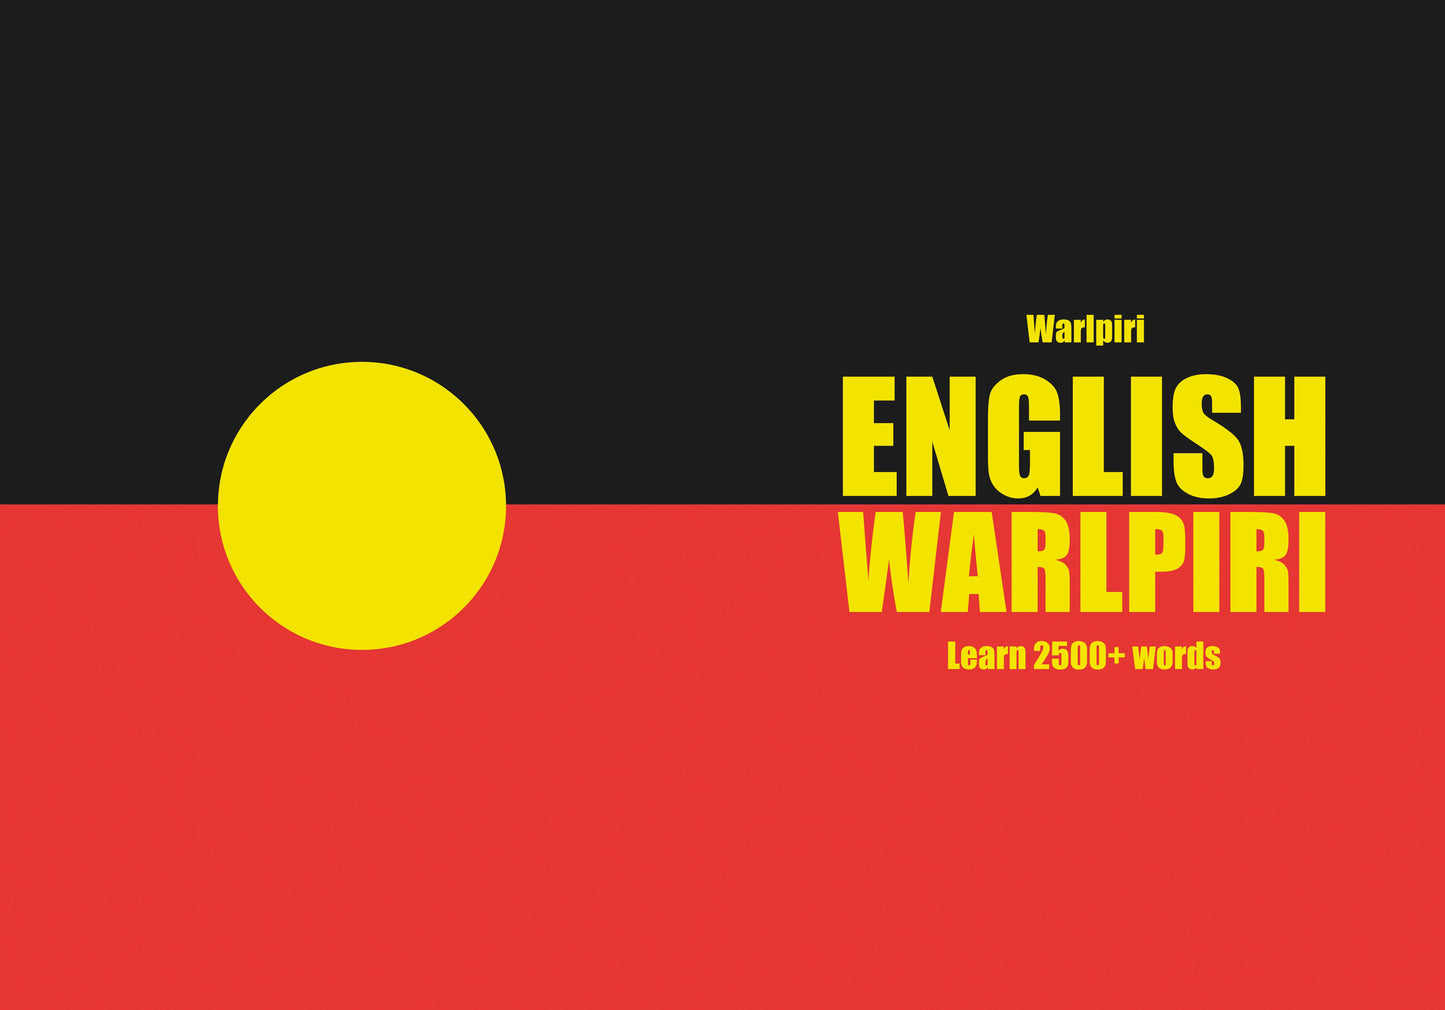 Warlpiri language learning notebook cover